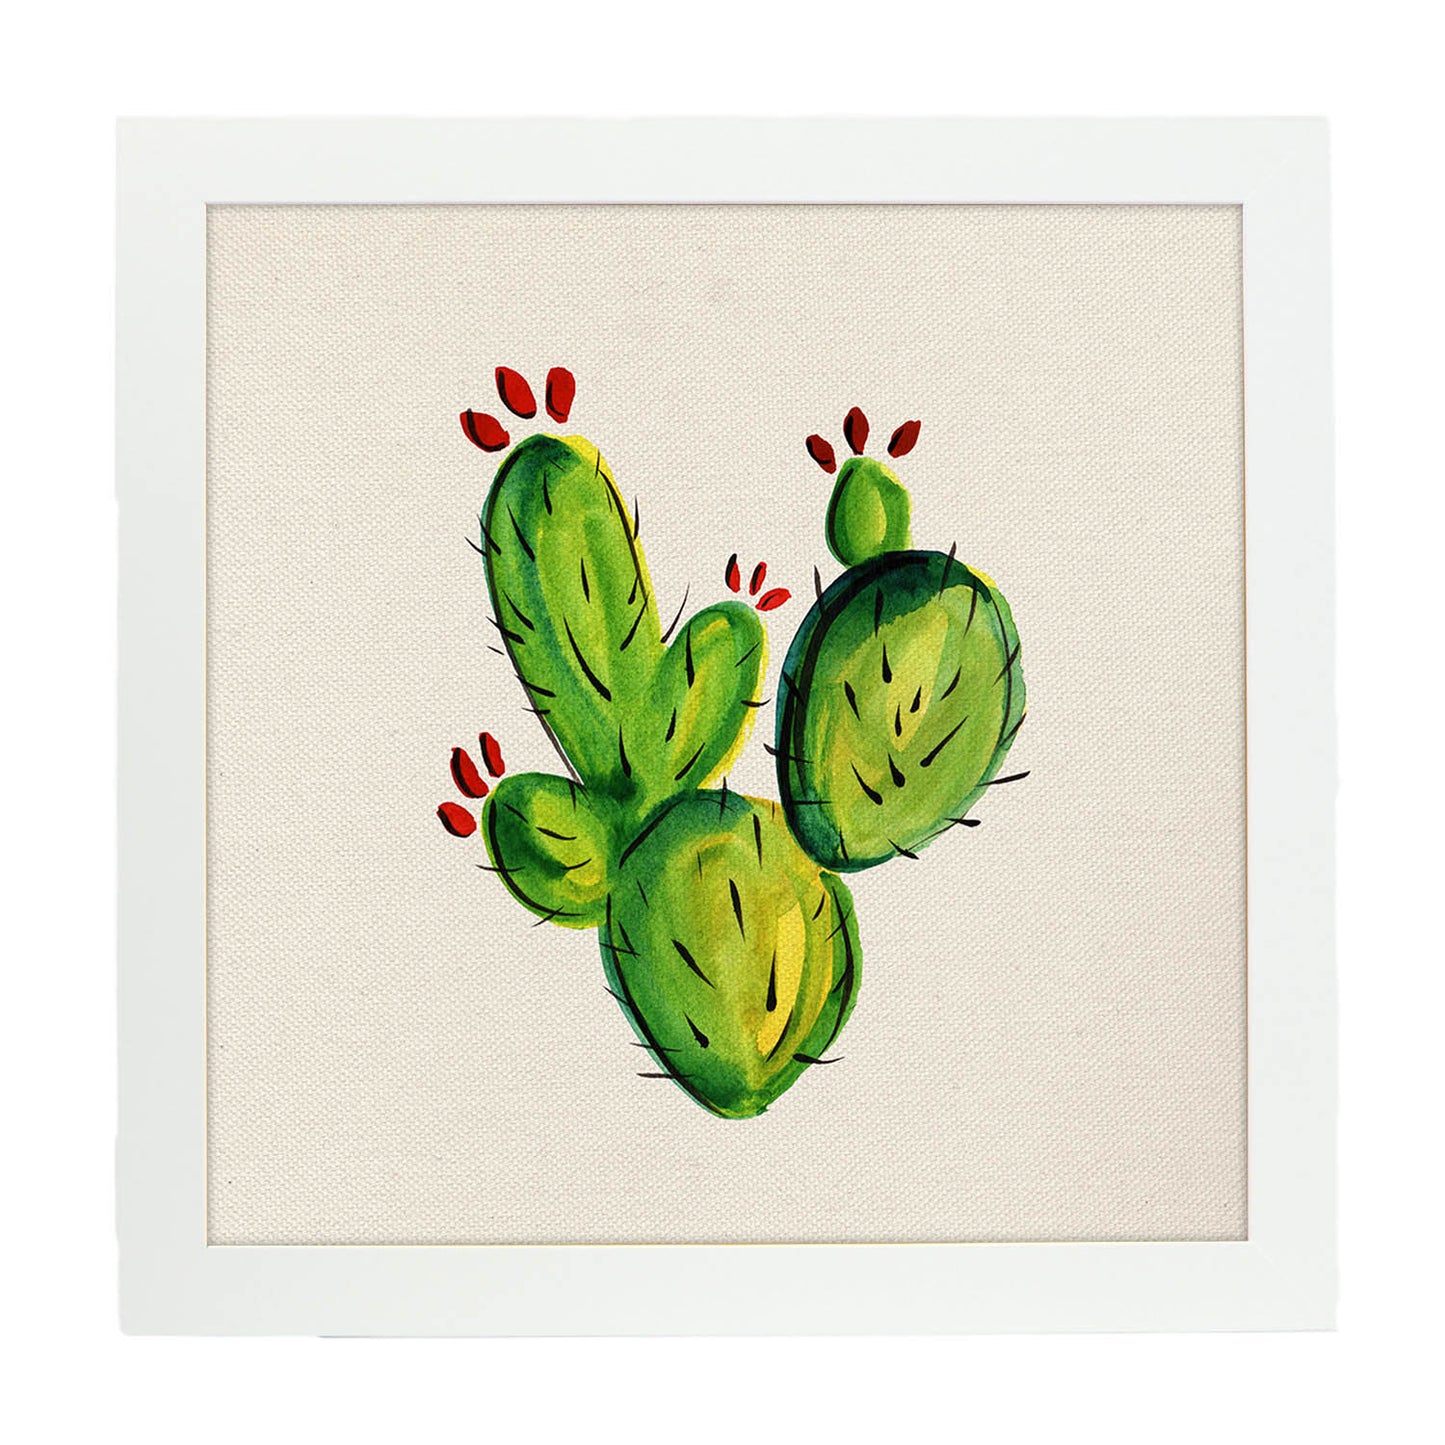 Poster de cactus dibujado. Lámina de Mírame, no me toques-Artwork-Nacnic-20x20 cm-Marco Blanco-Nacnic Estudio SL